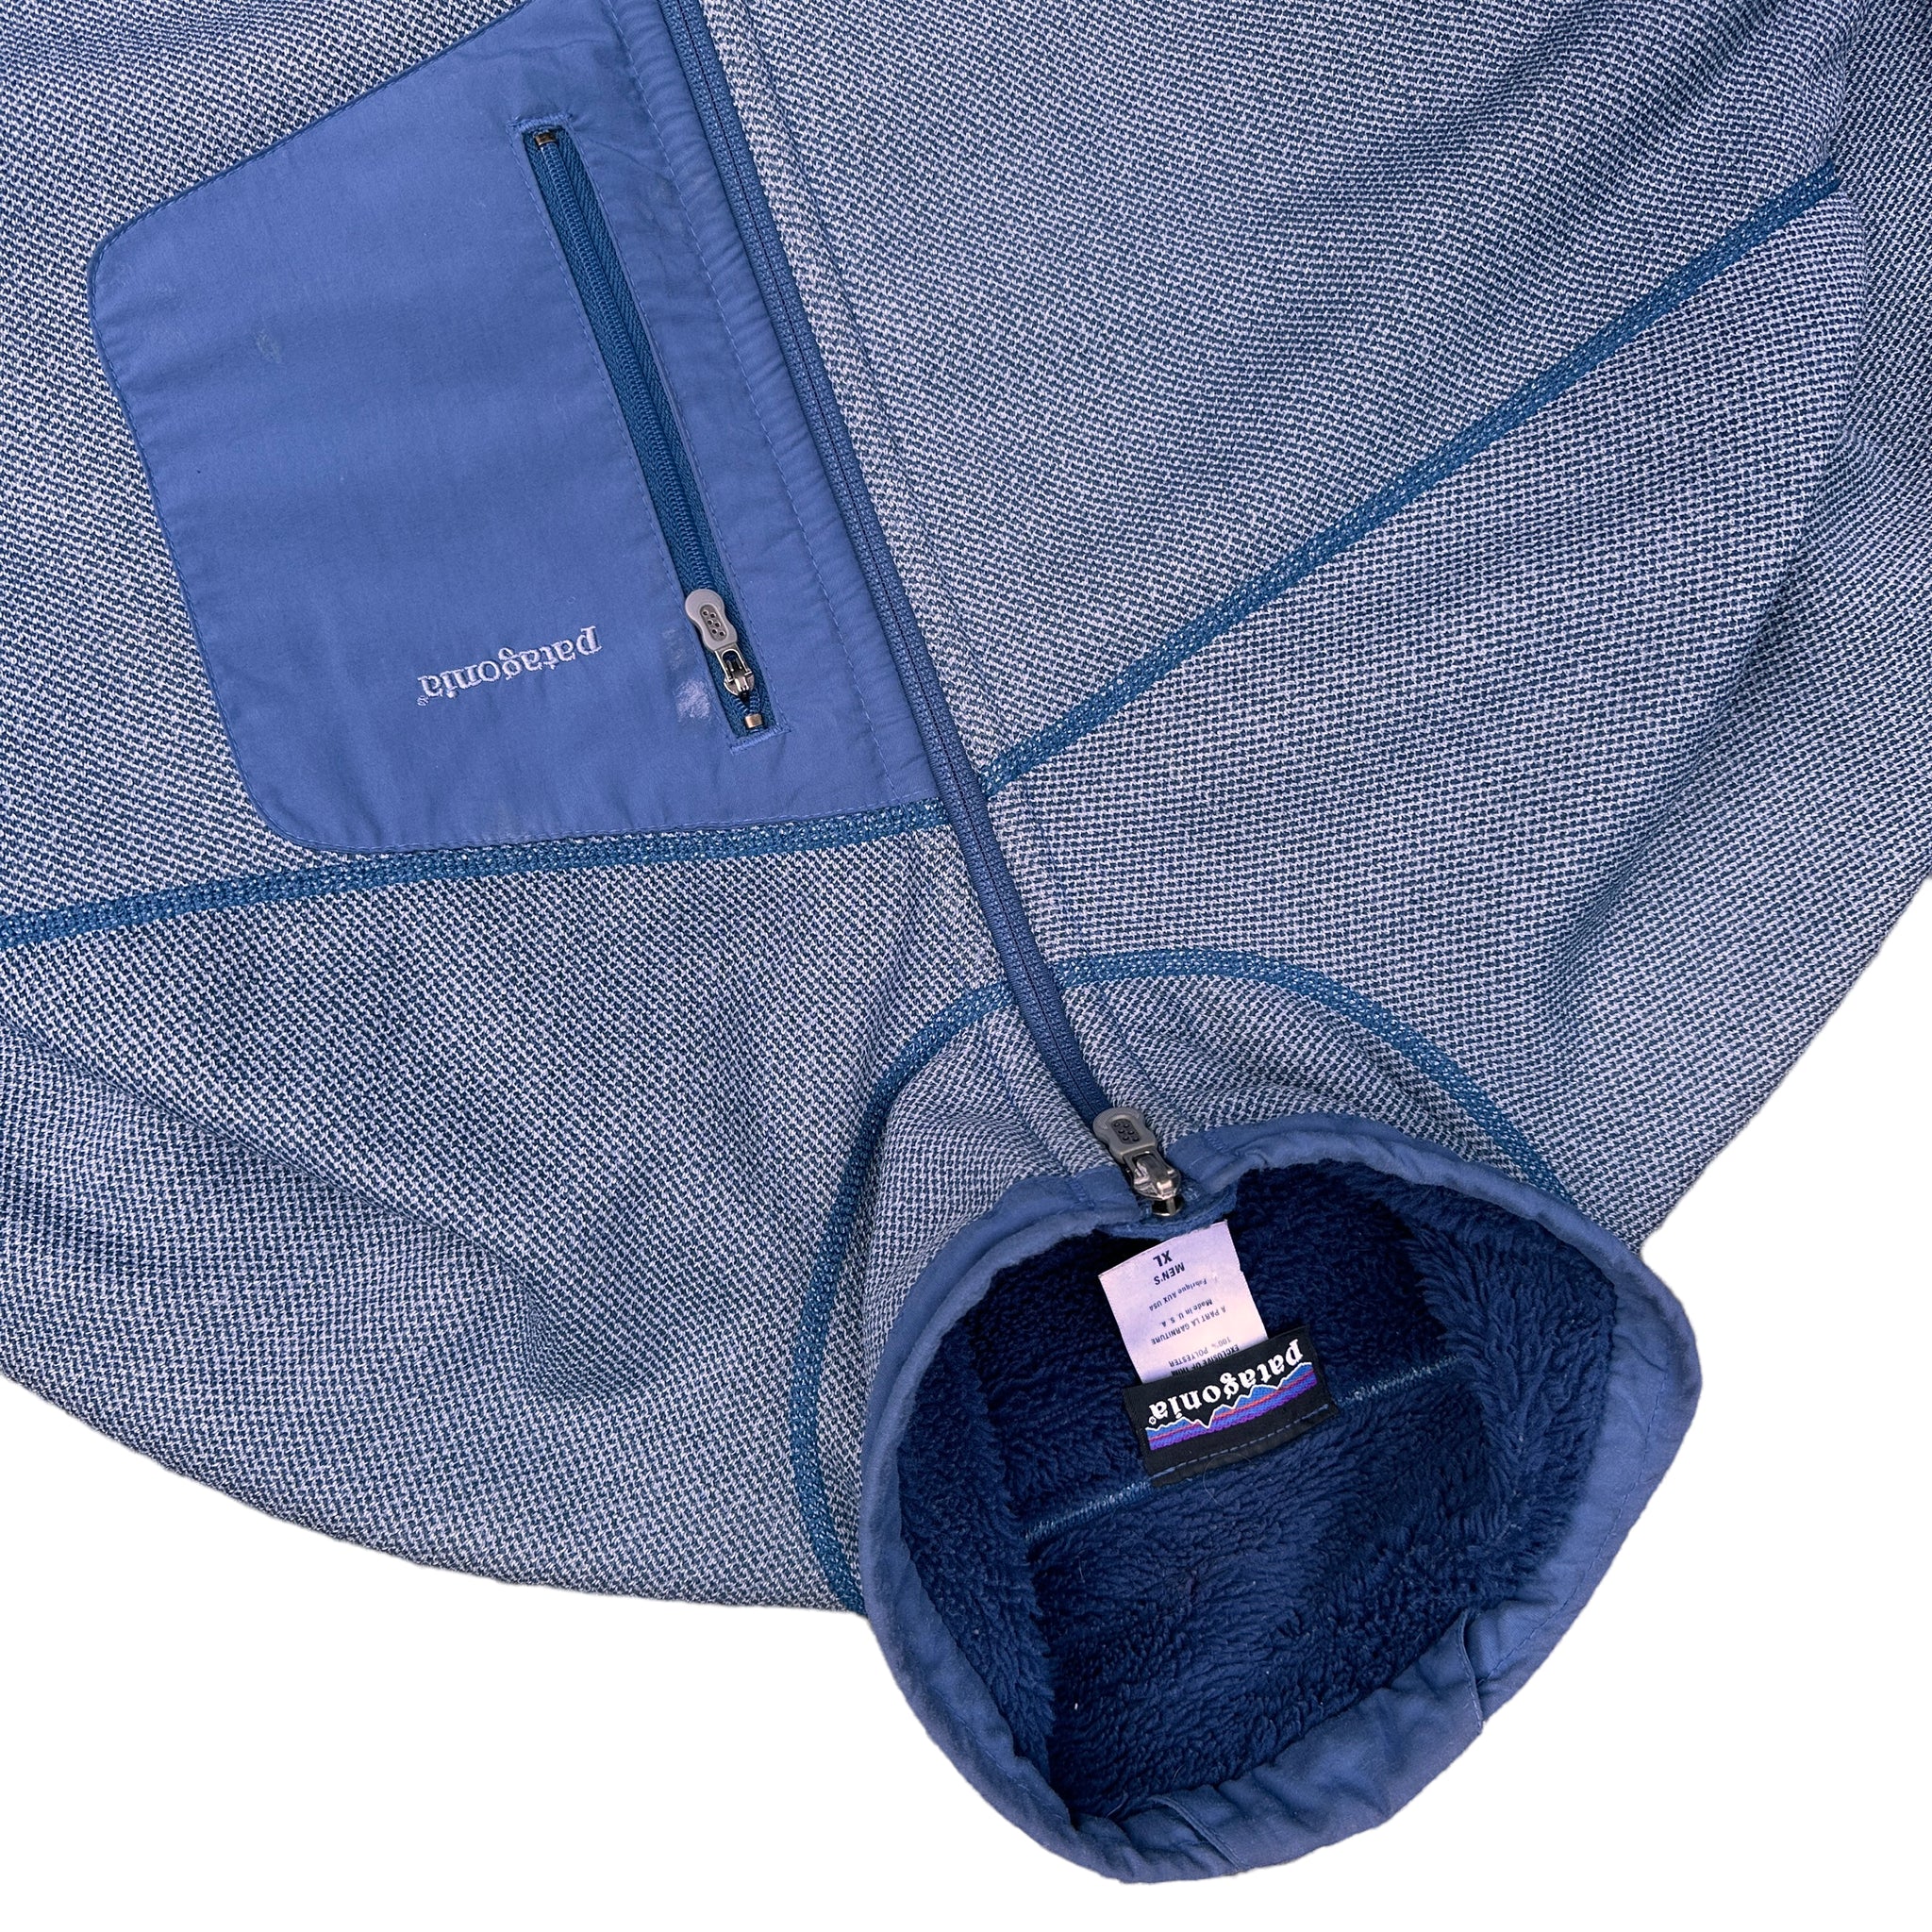 Patagonia regulator fleece Made in usa🇺🇸 XL